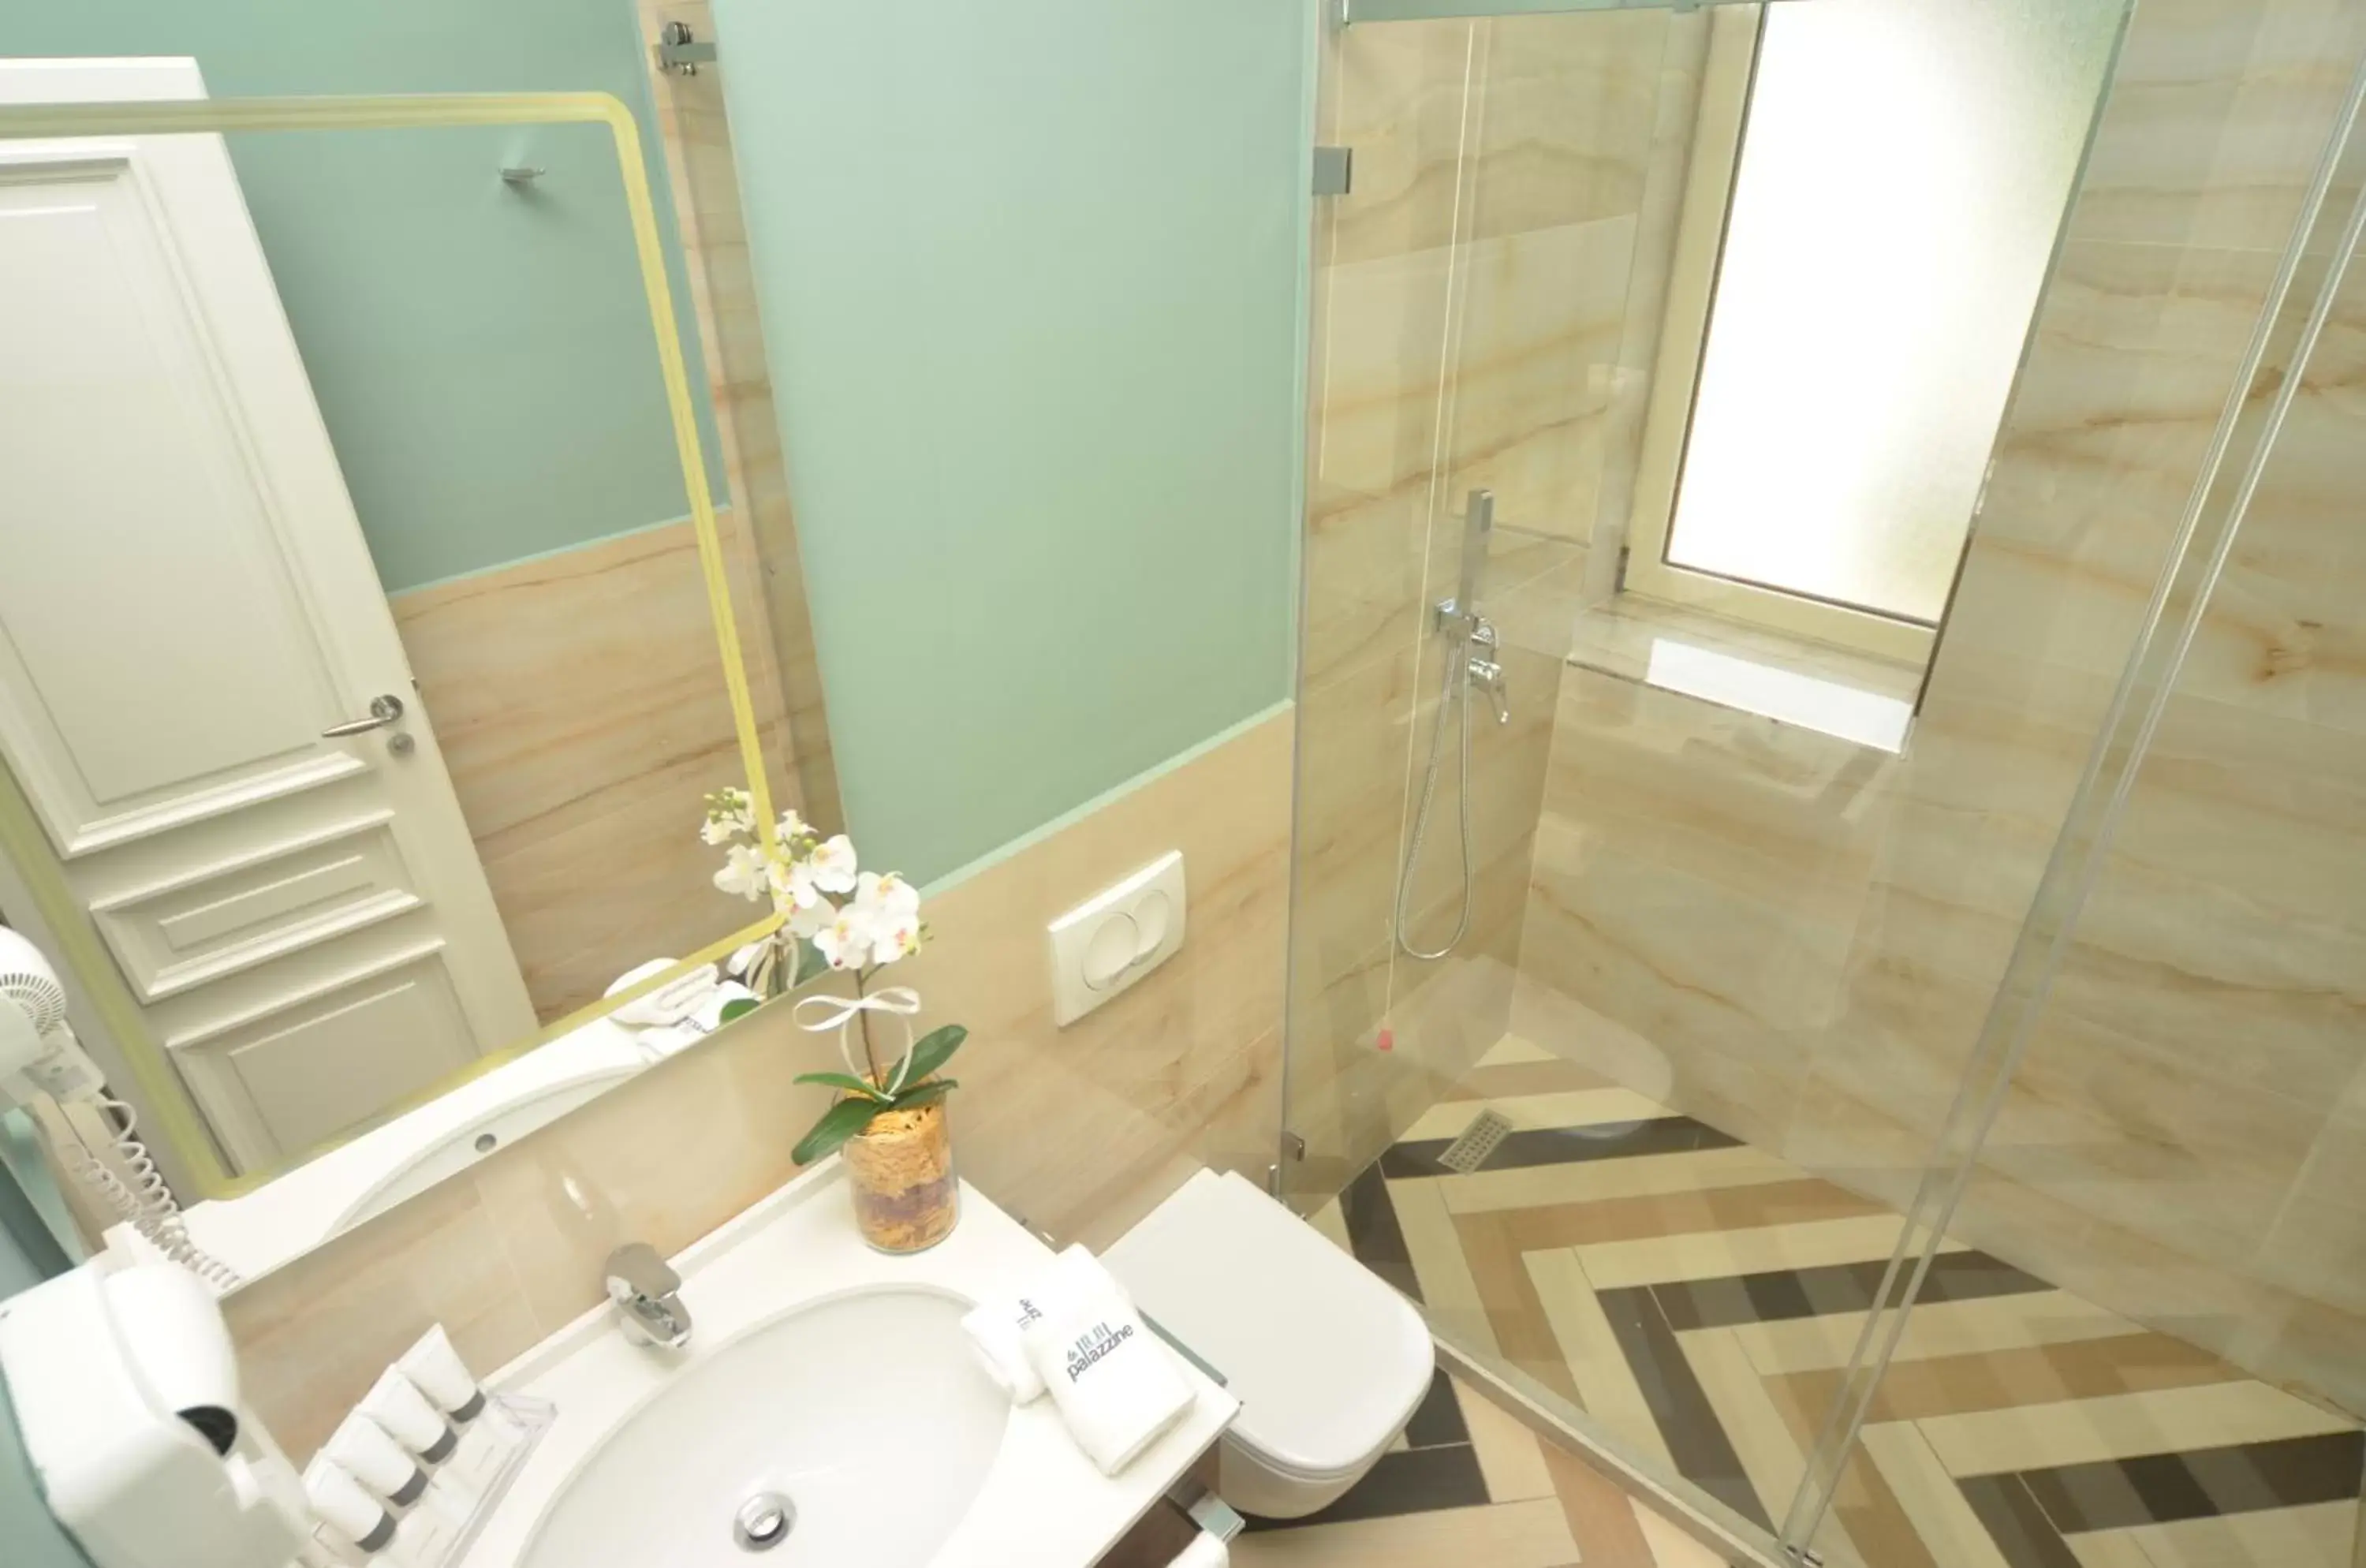 Bathroom in Le Palazzine Hotel